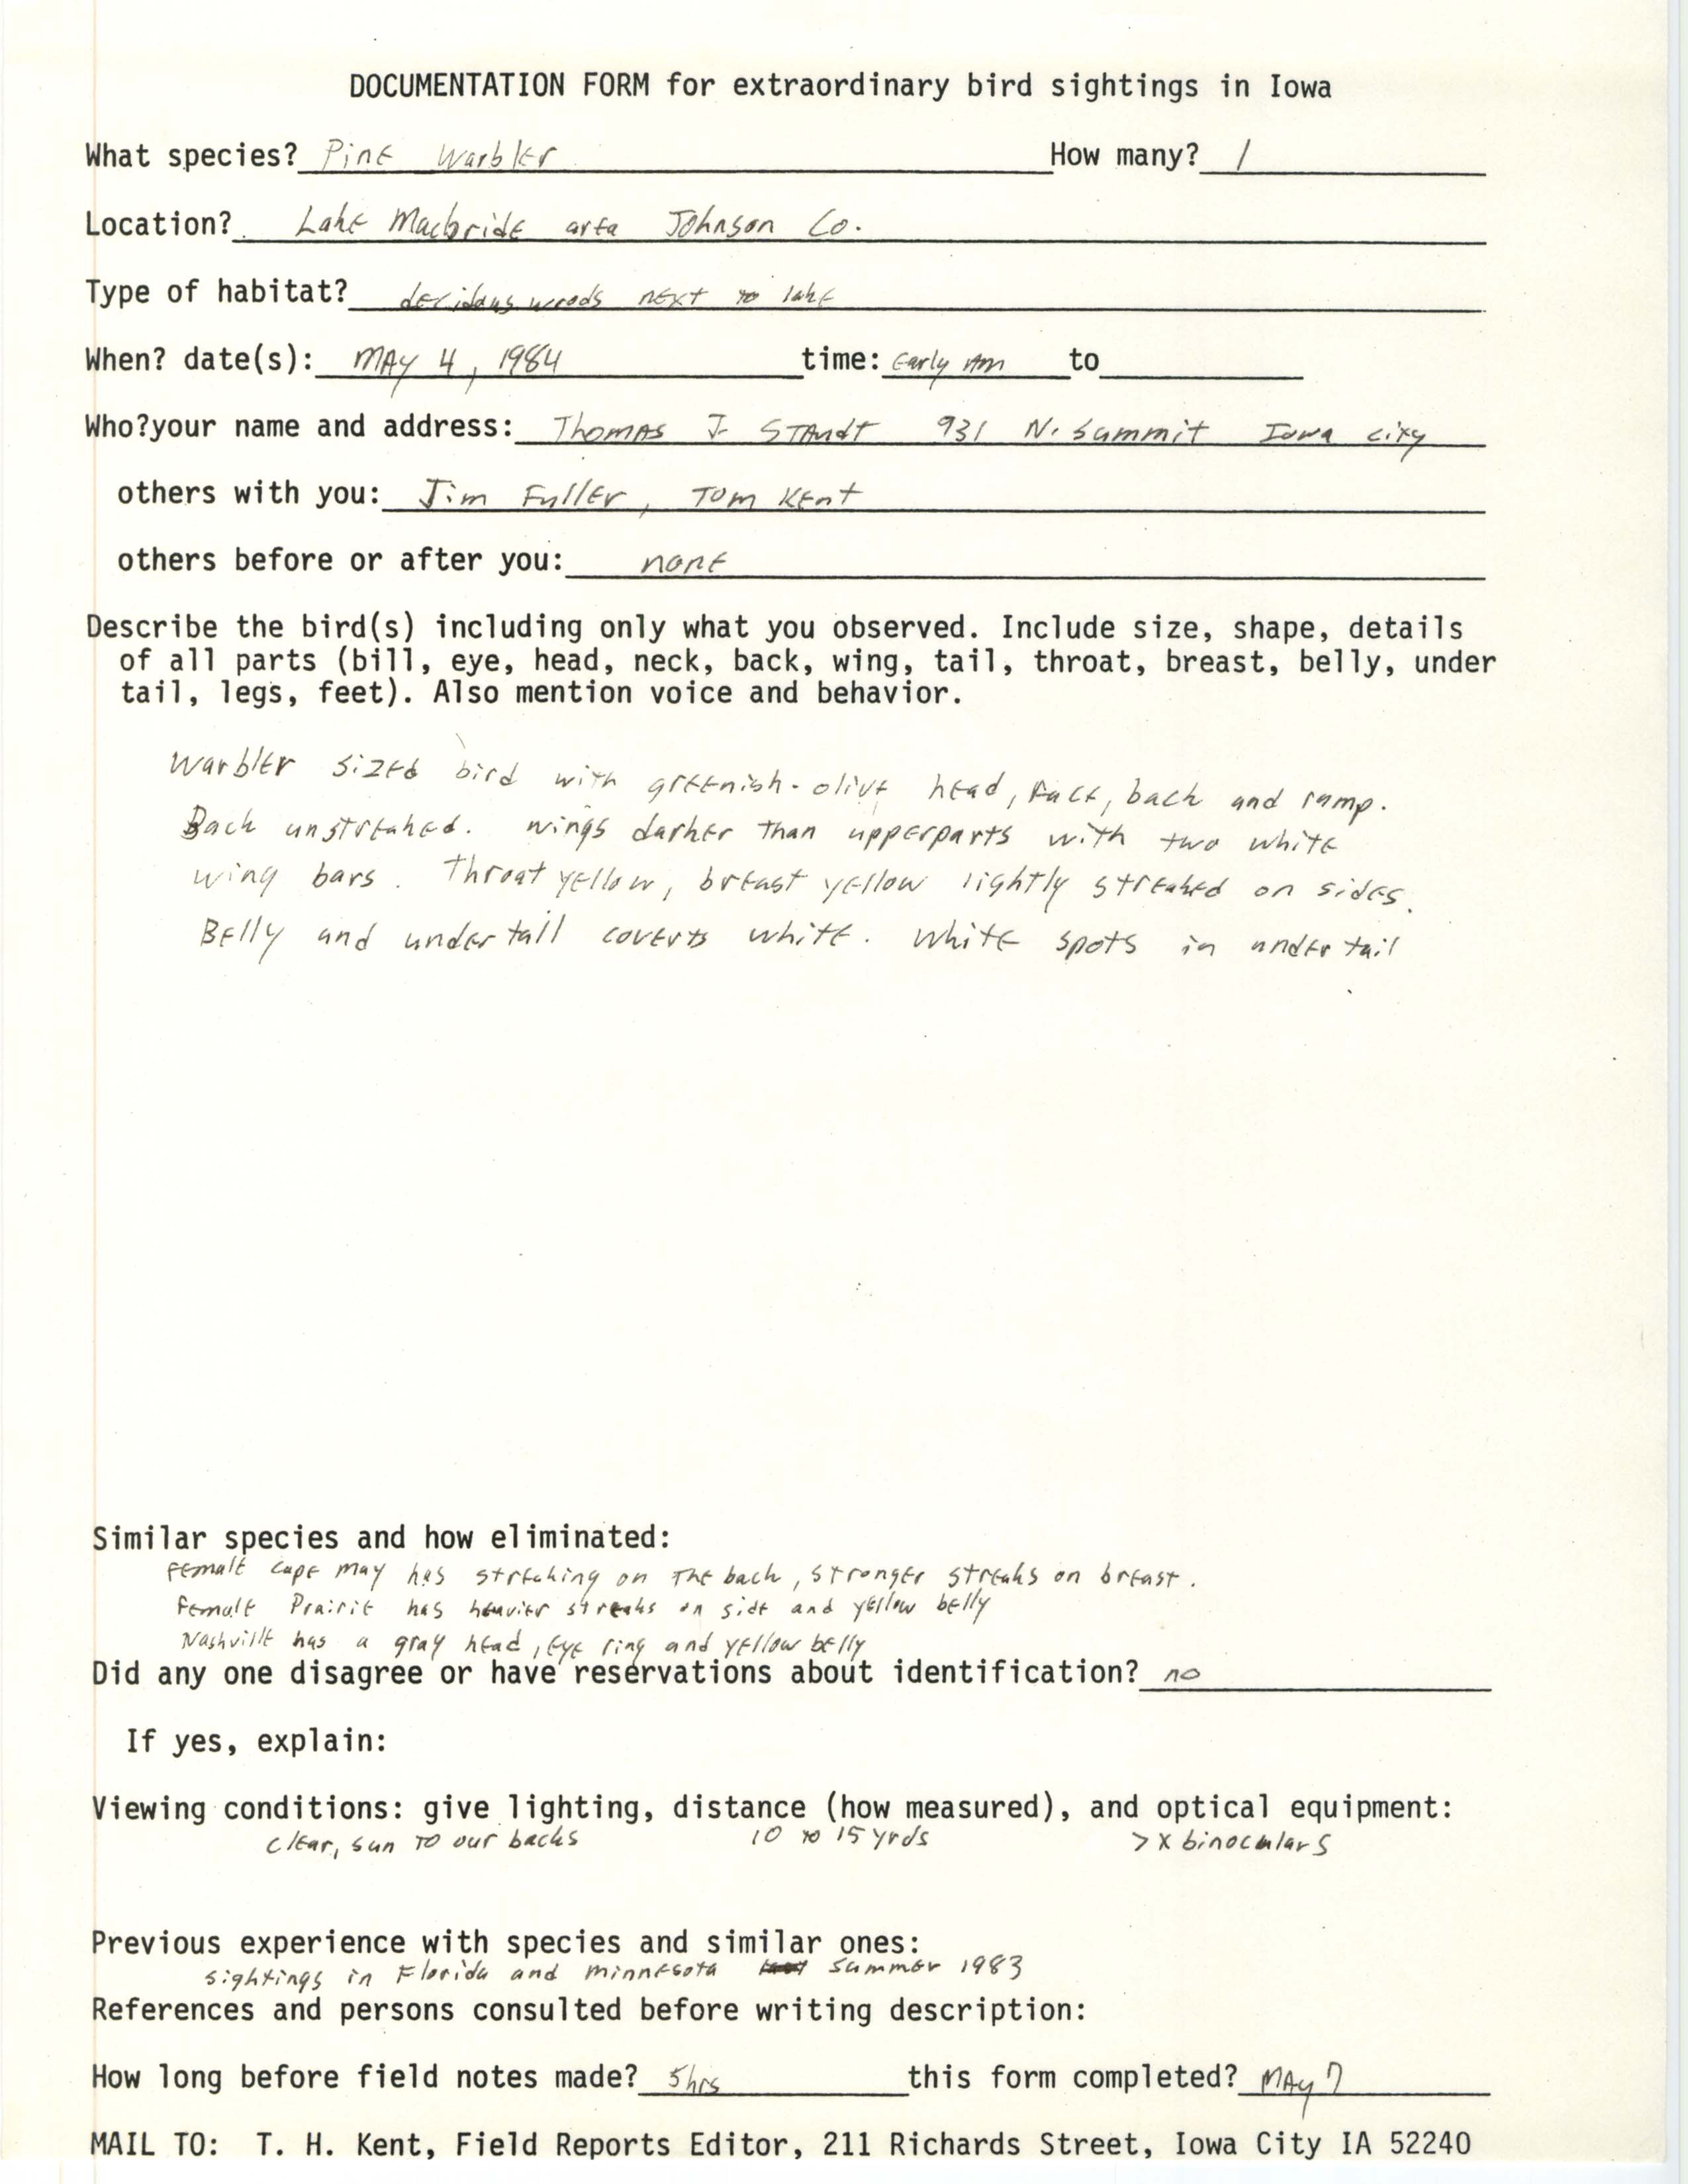 Rare bird documentation form for Pine Warbler at Lake MacBride State Park, 1984